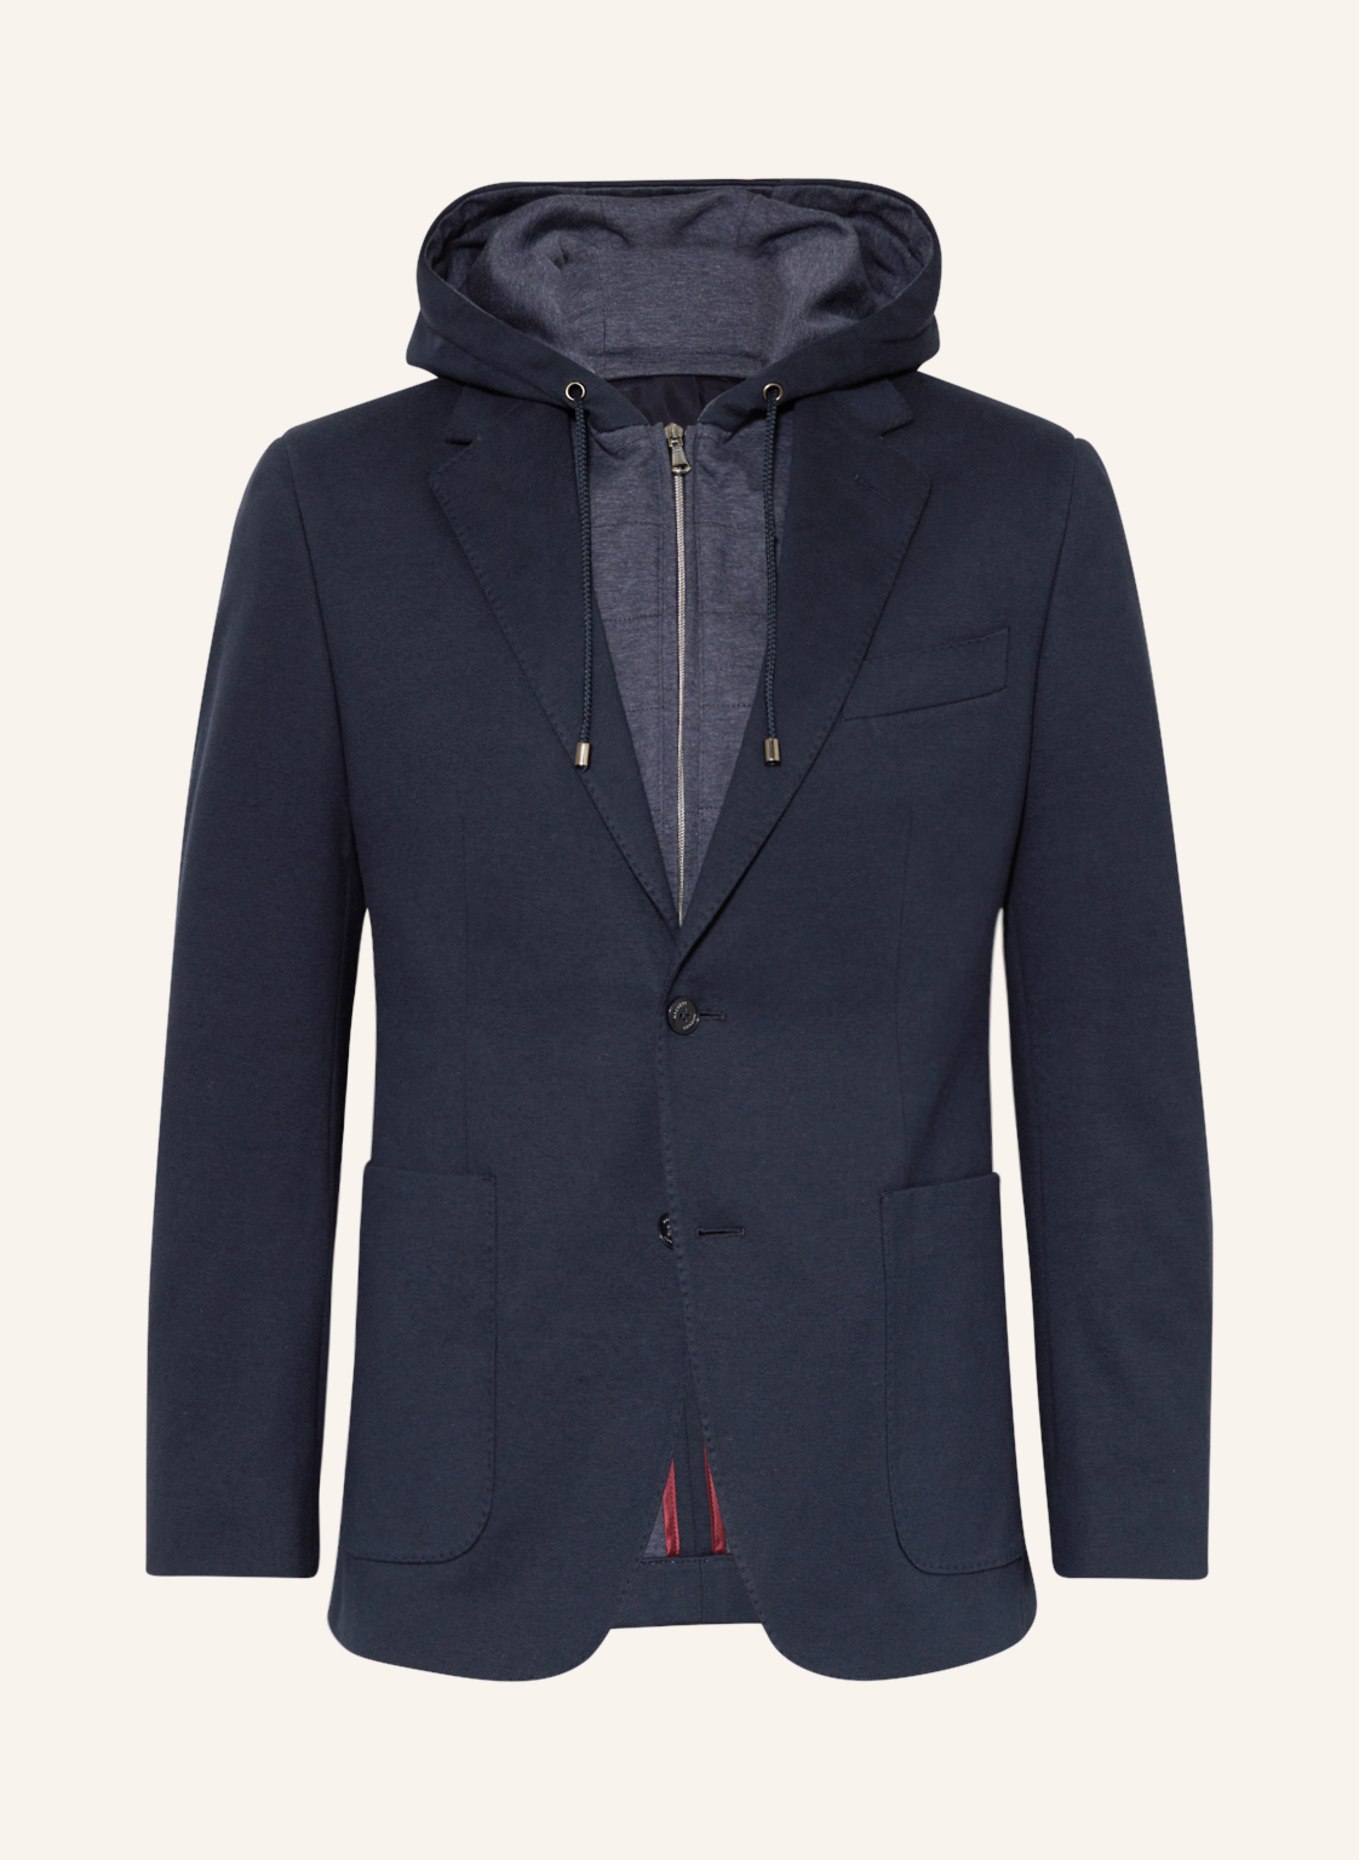 Hackett Jackets | Premium Coats & Jackets for Men